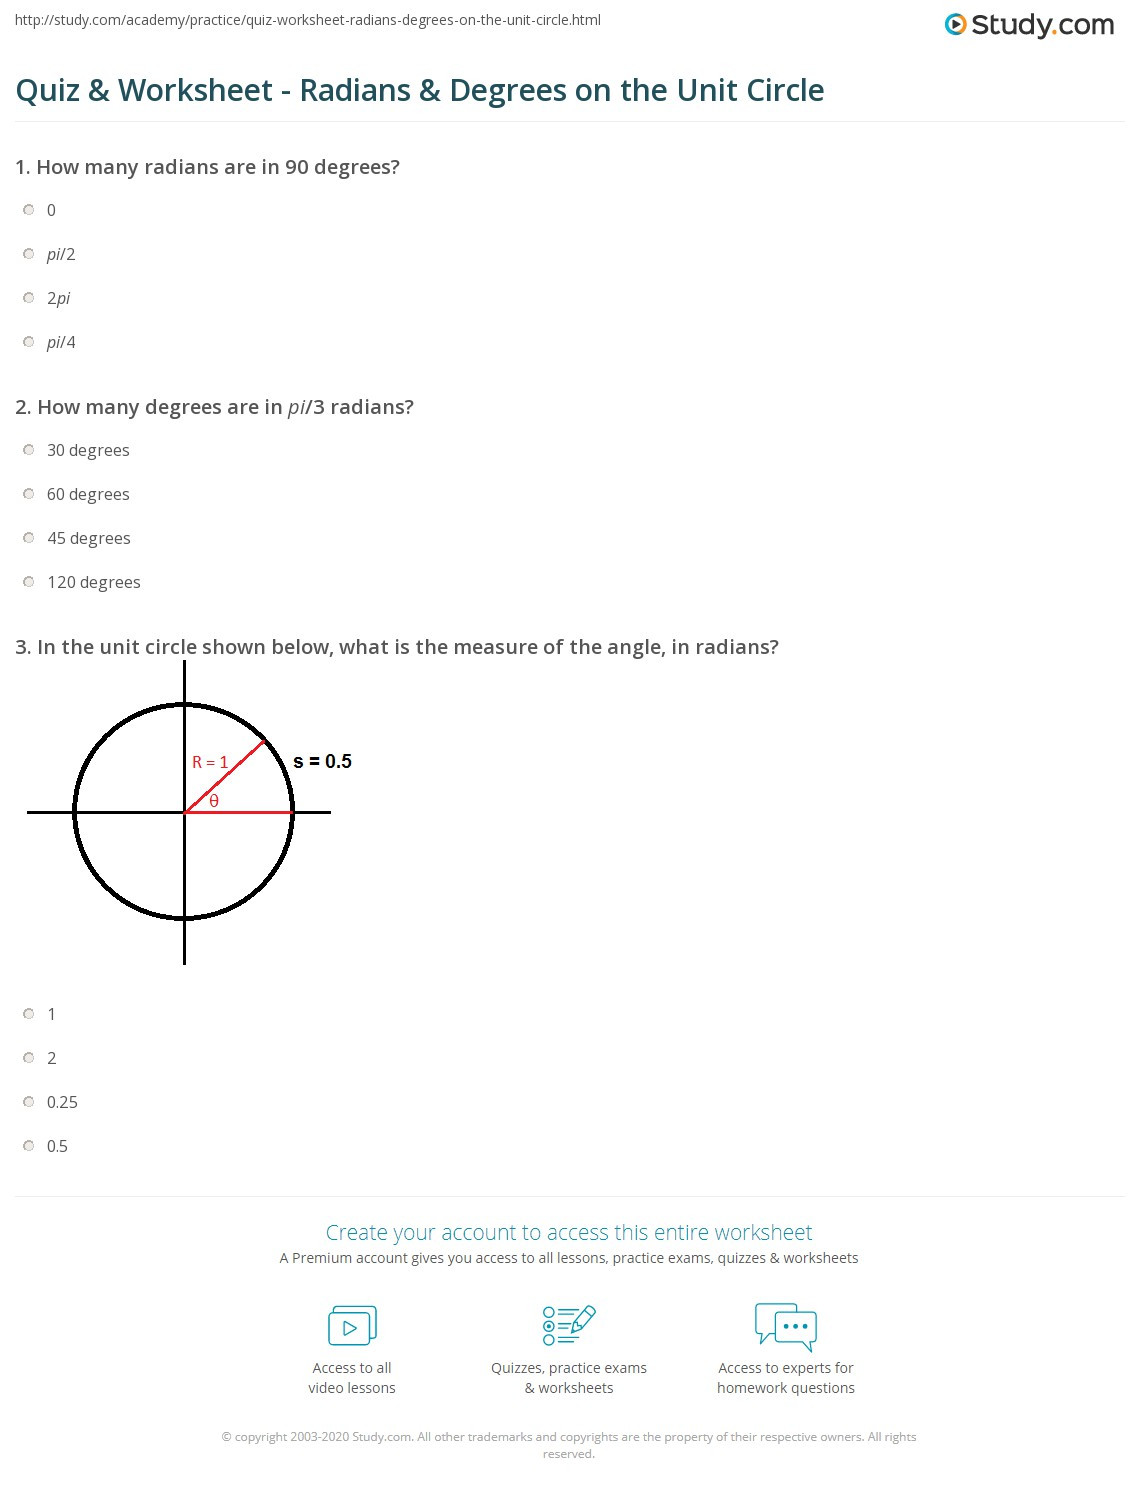 Radians to Degrees Worksheet Quiz &amp; Worksheet Radians &amp; Degrees On the Unit Circle